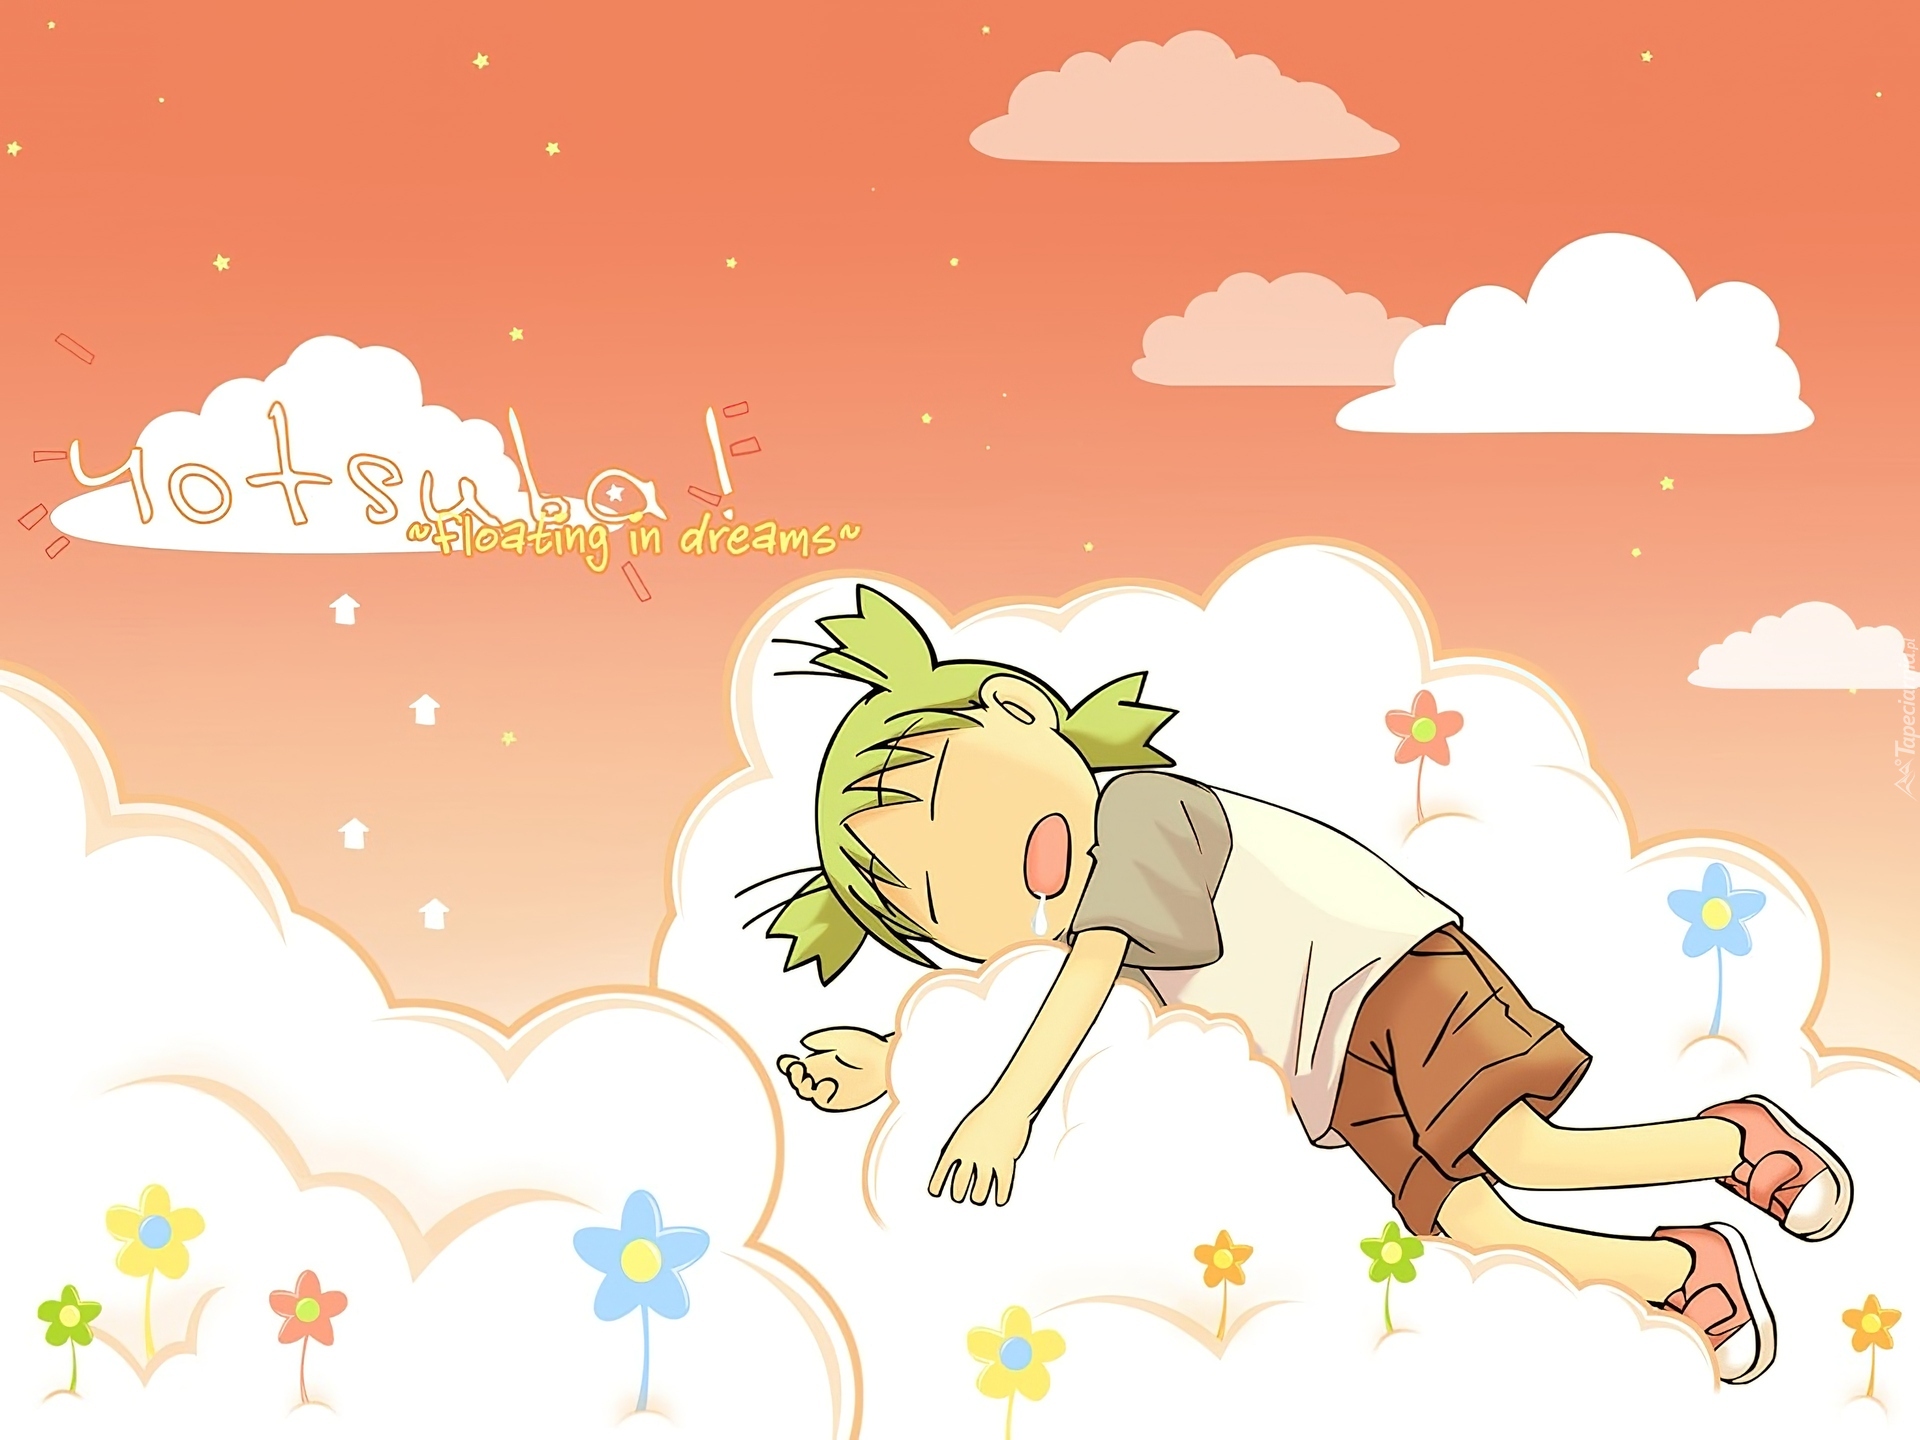 Yotsubato, chmurki, kwiatki, dziecko